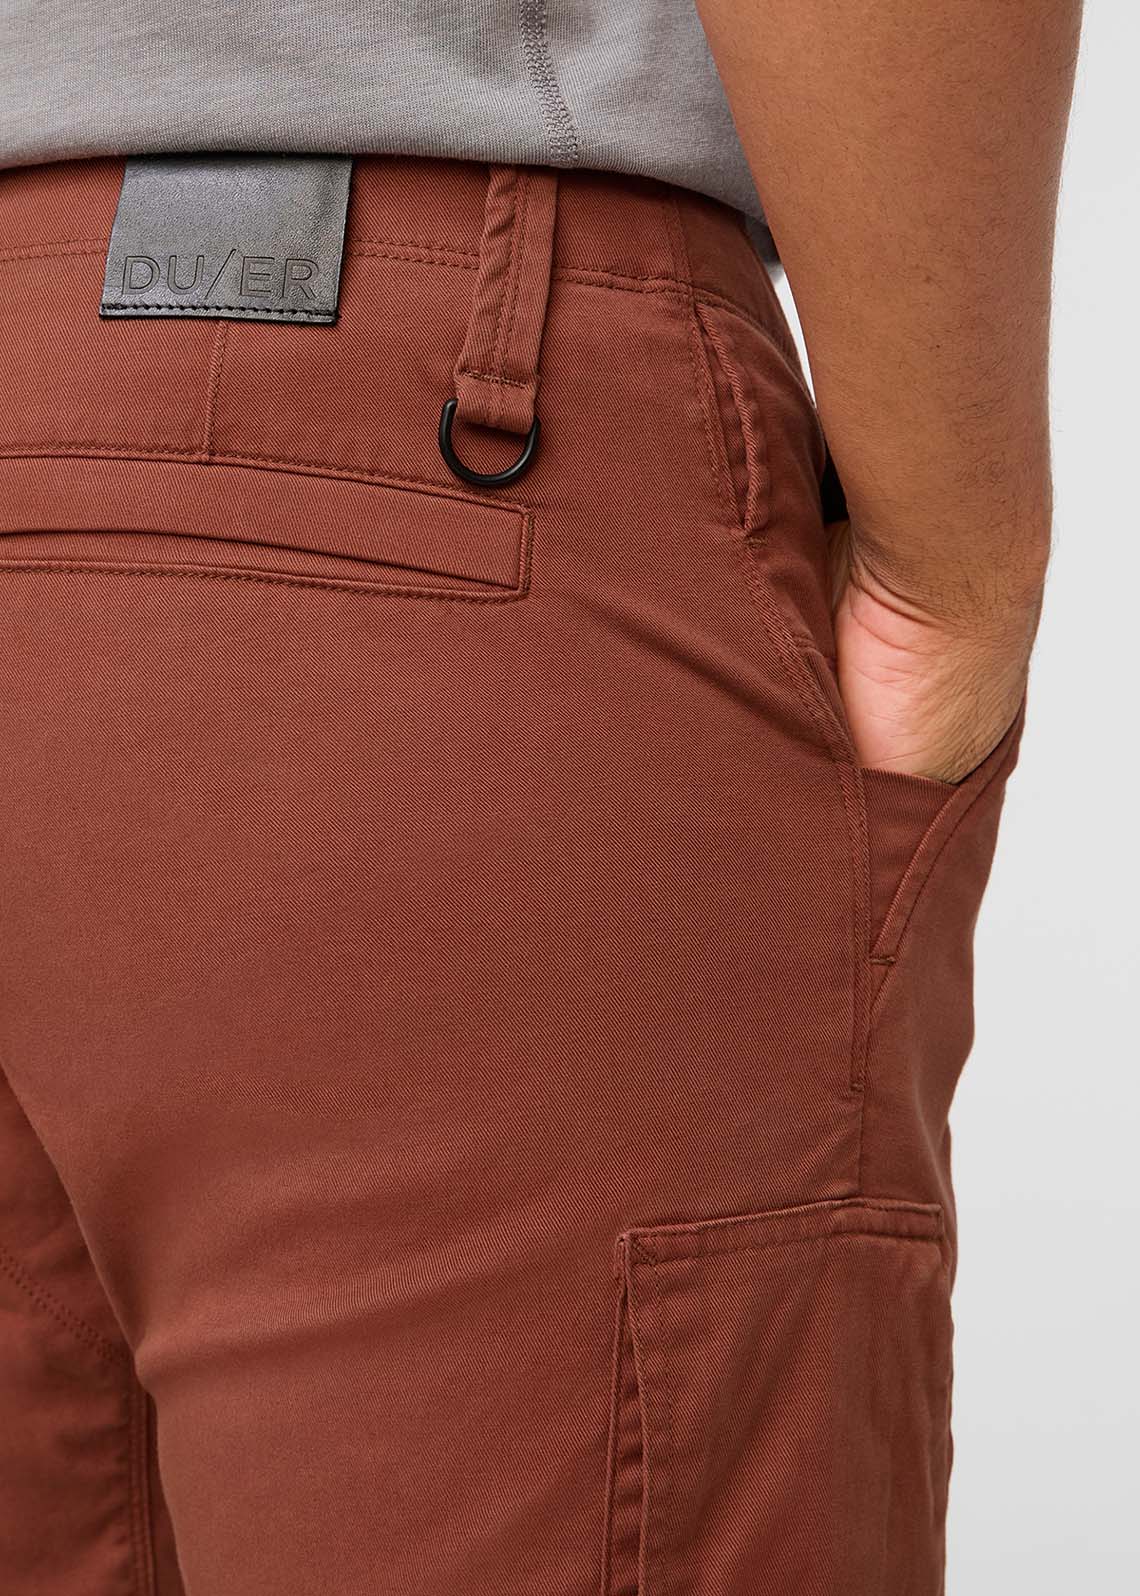 mens red-brown athletic waterproof pant back pocket and key ring